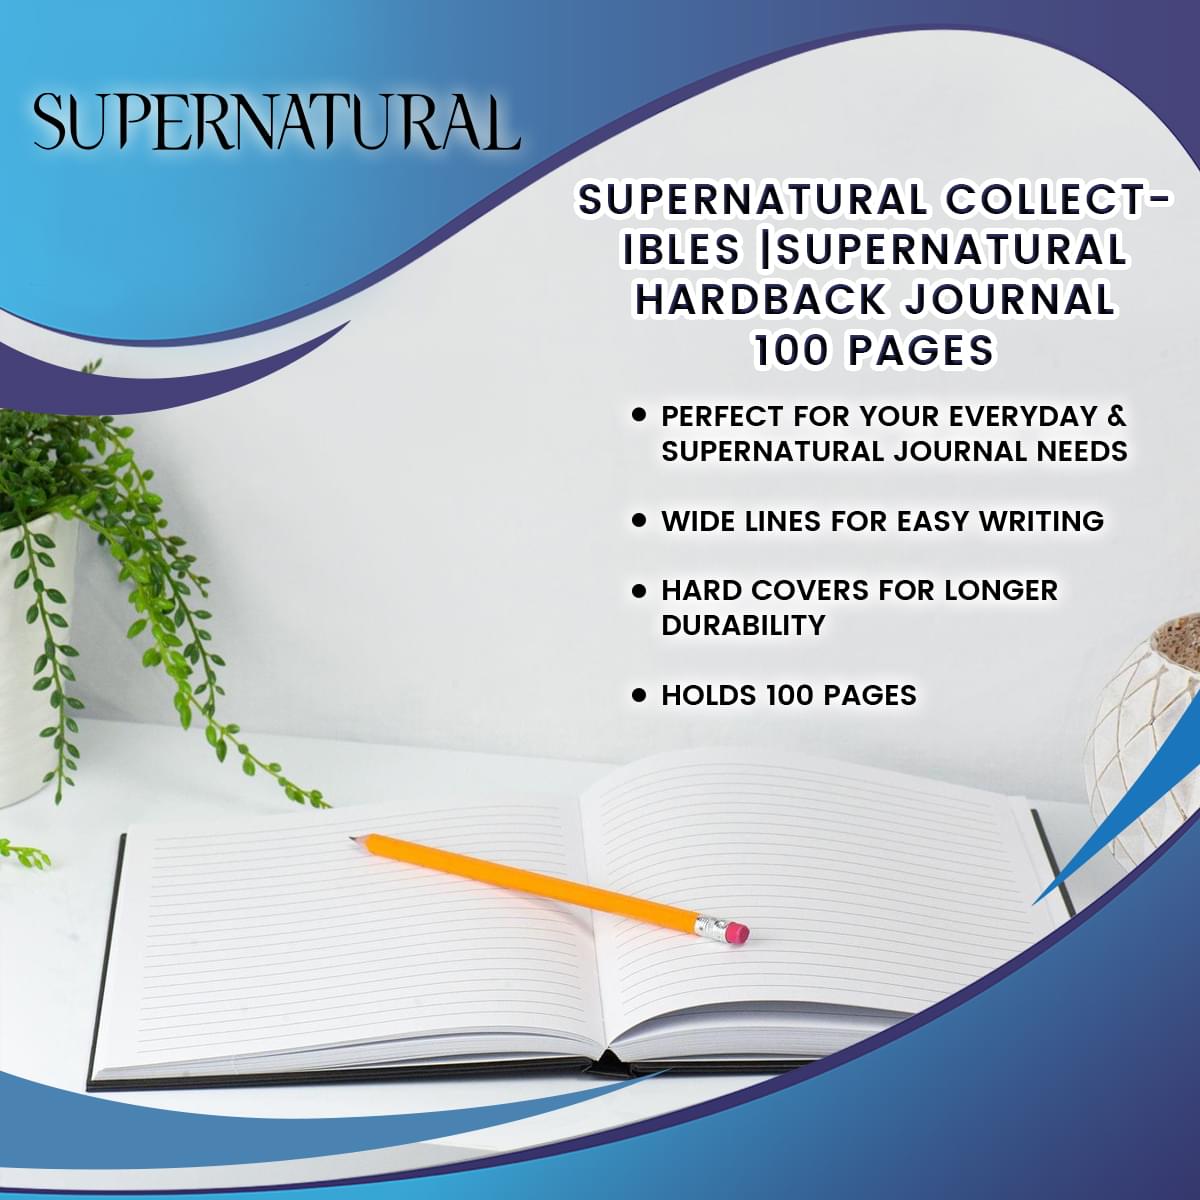 Supernatural Collectibles |Supernatural Hardback Journal | 100 Pages